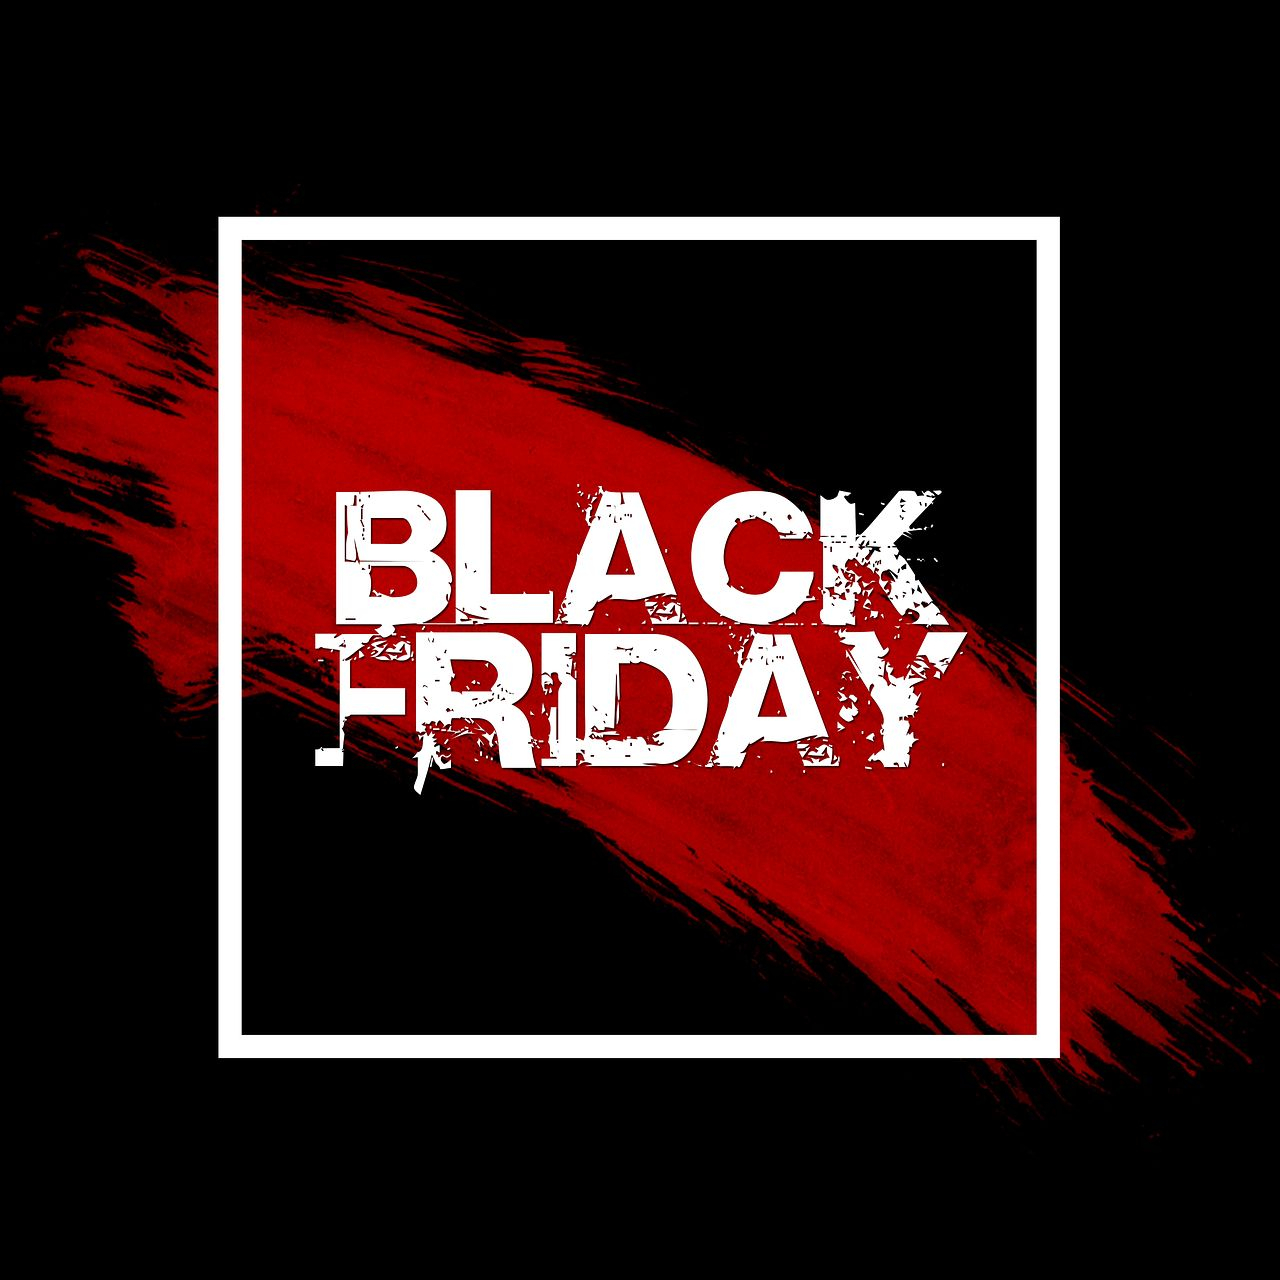 Black Friday Italia: Amazon, Apple, Ebay ed elettronica